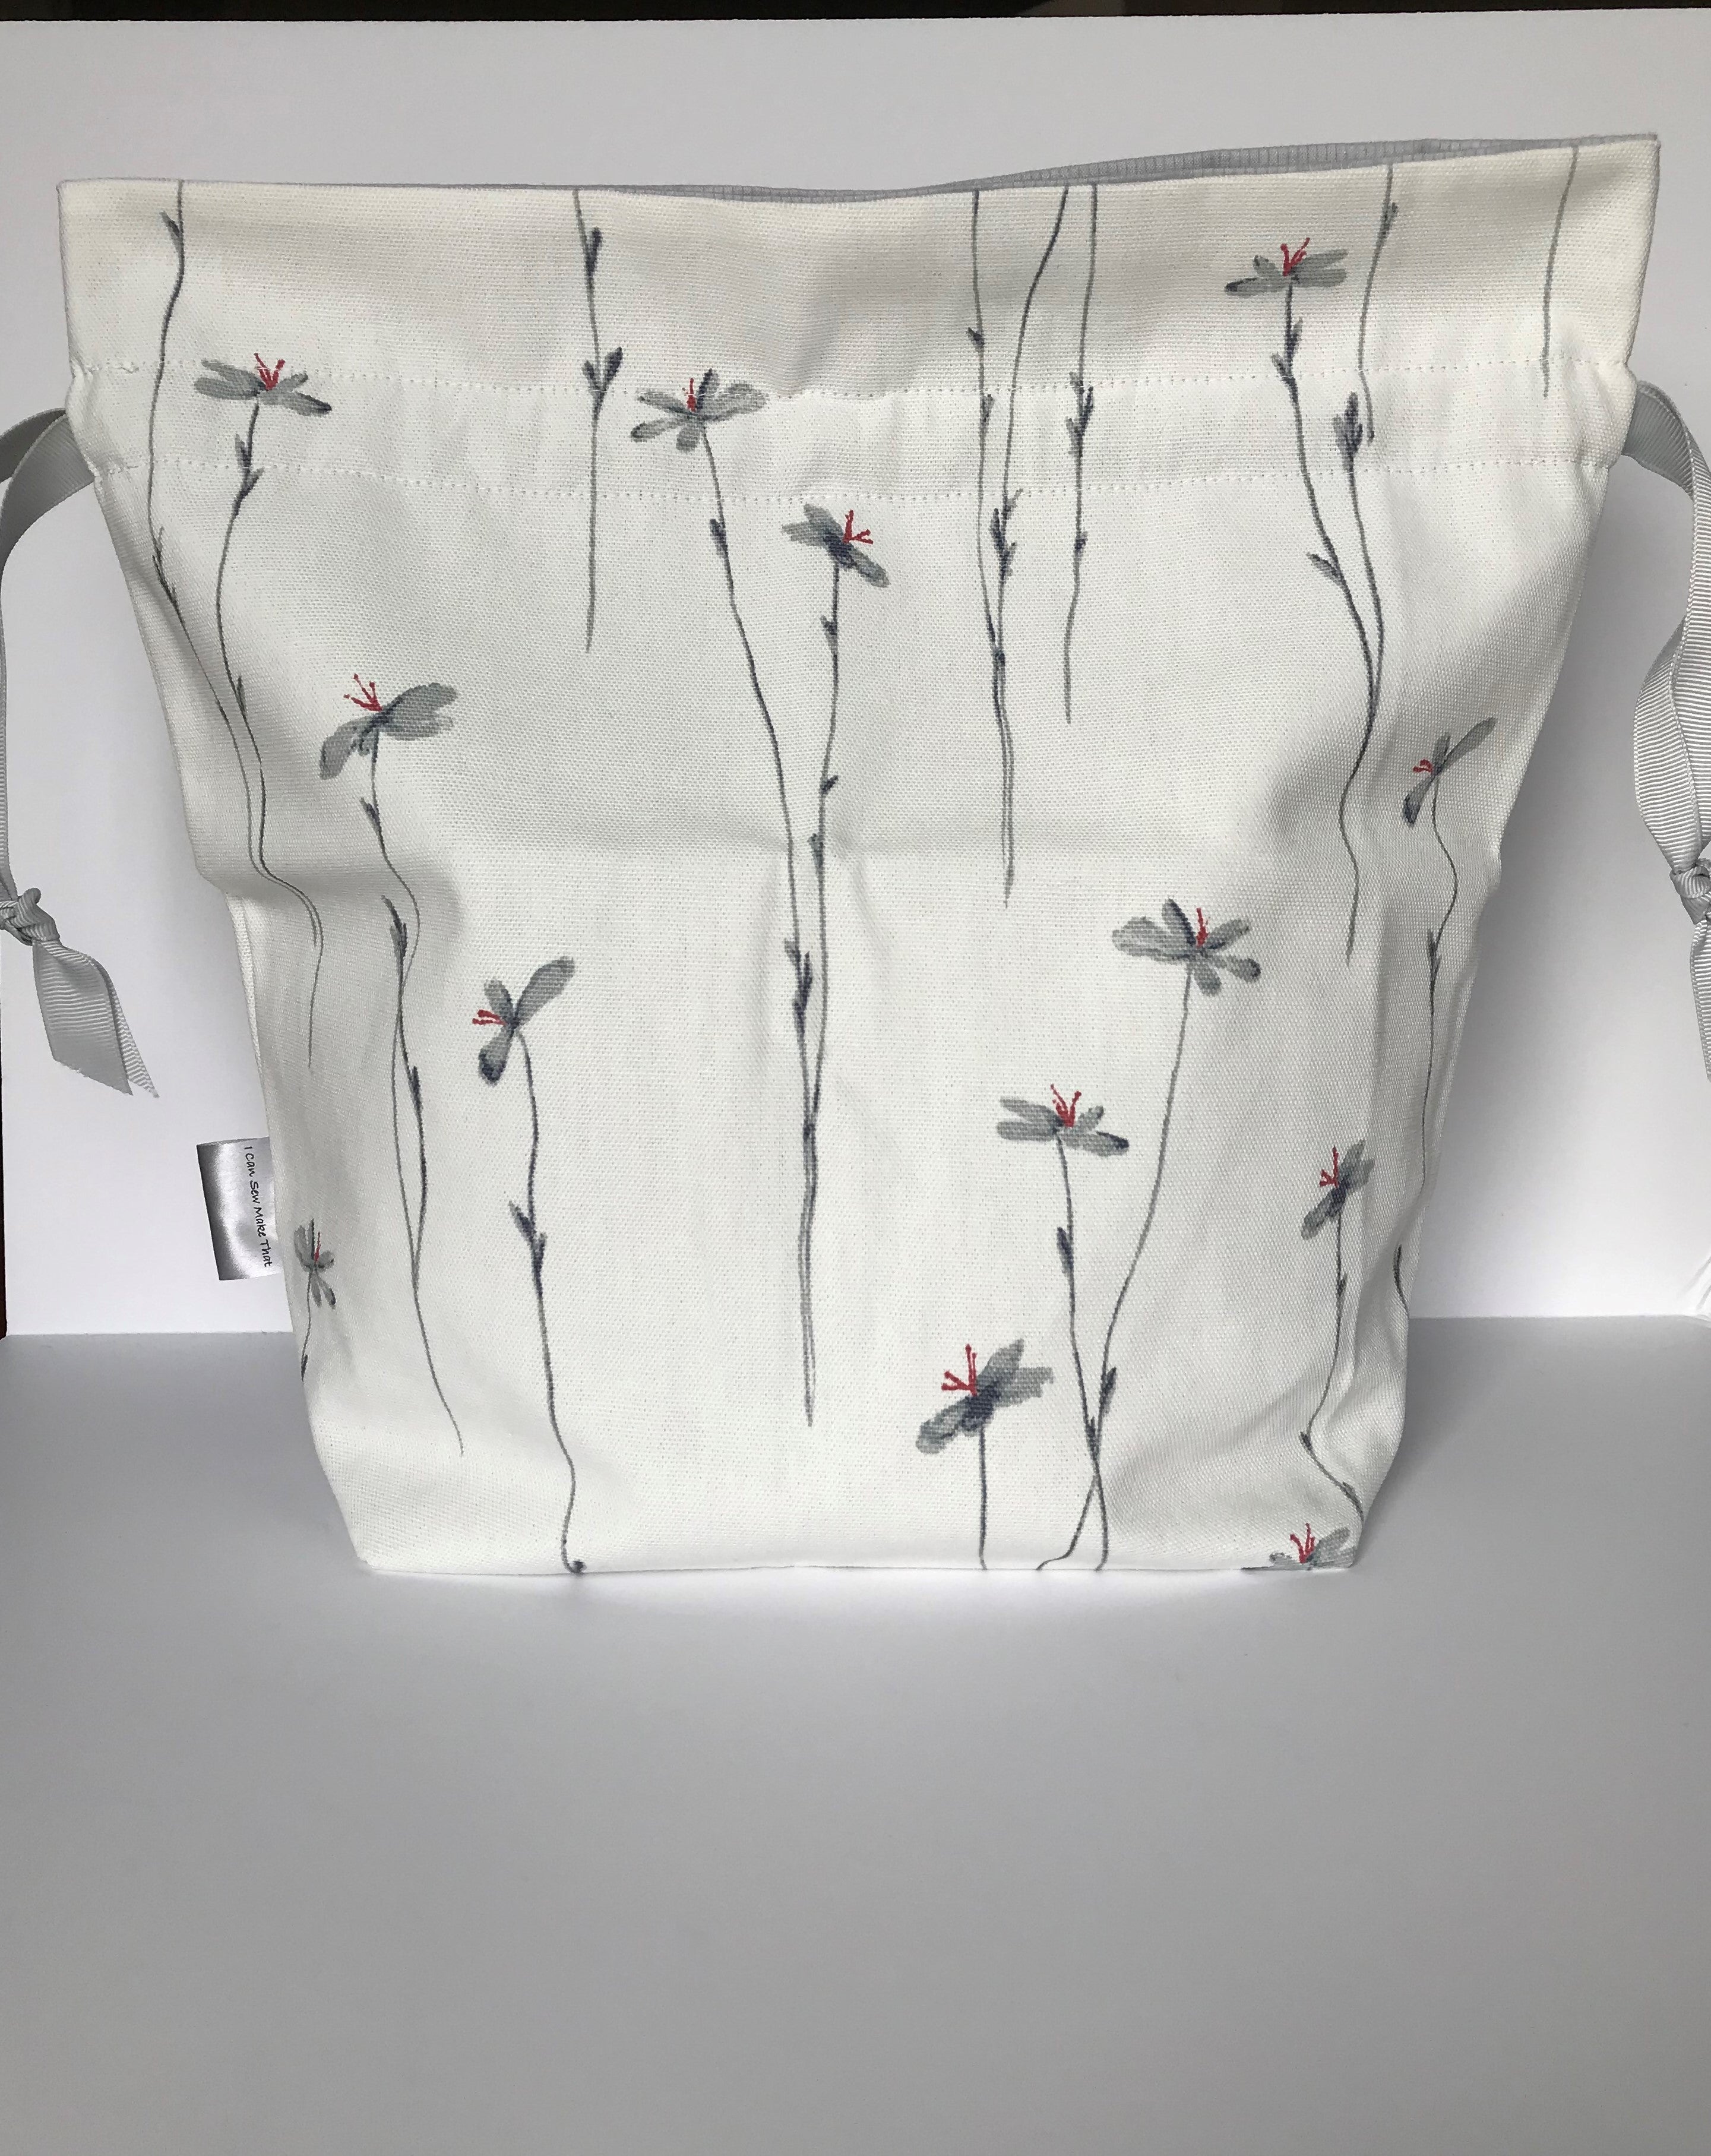 Large Drawstring Bag - white with floral design